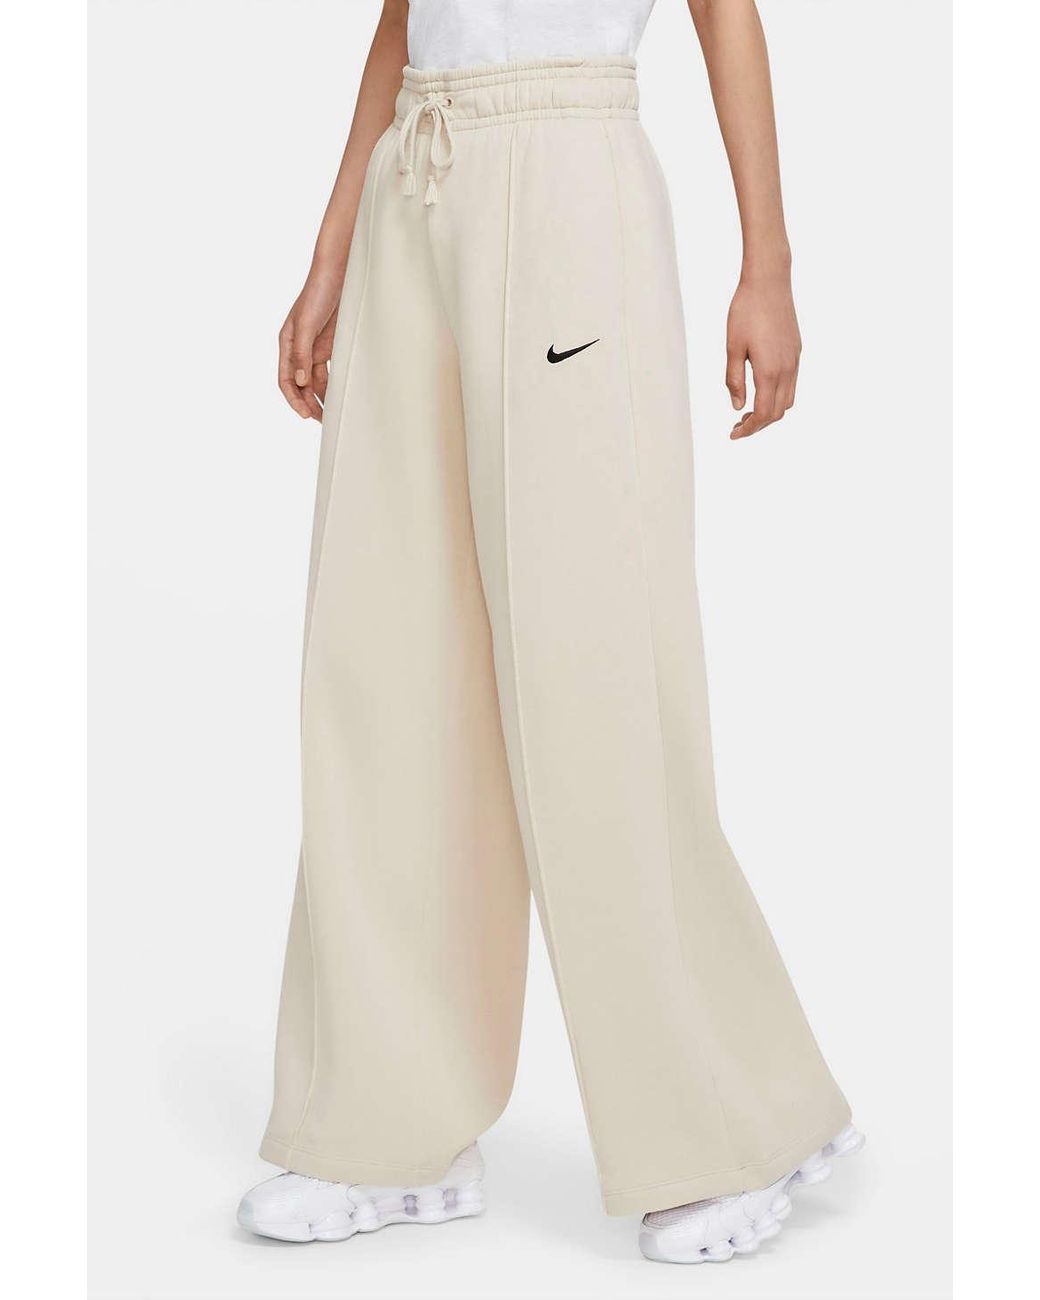 Nike Sportswear Trend Essential Fleece Pant in Natural Lyst